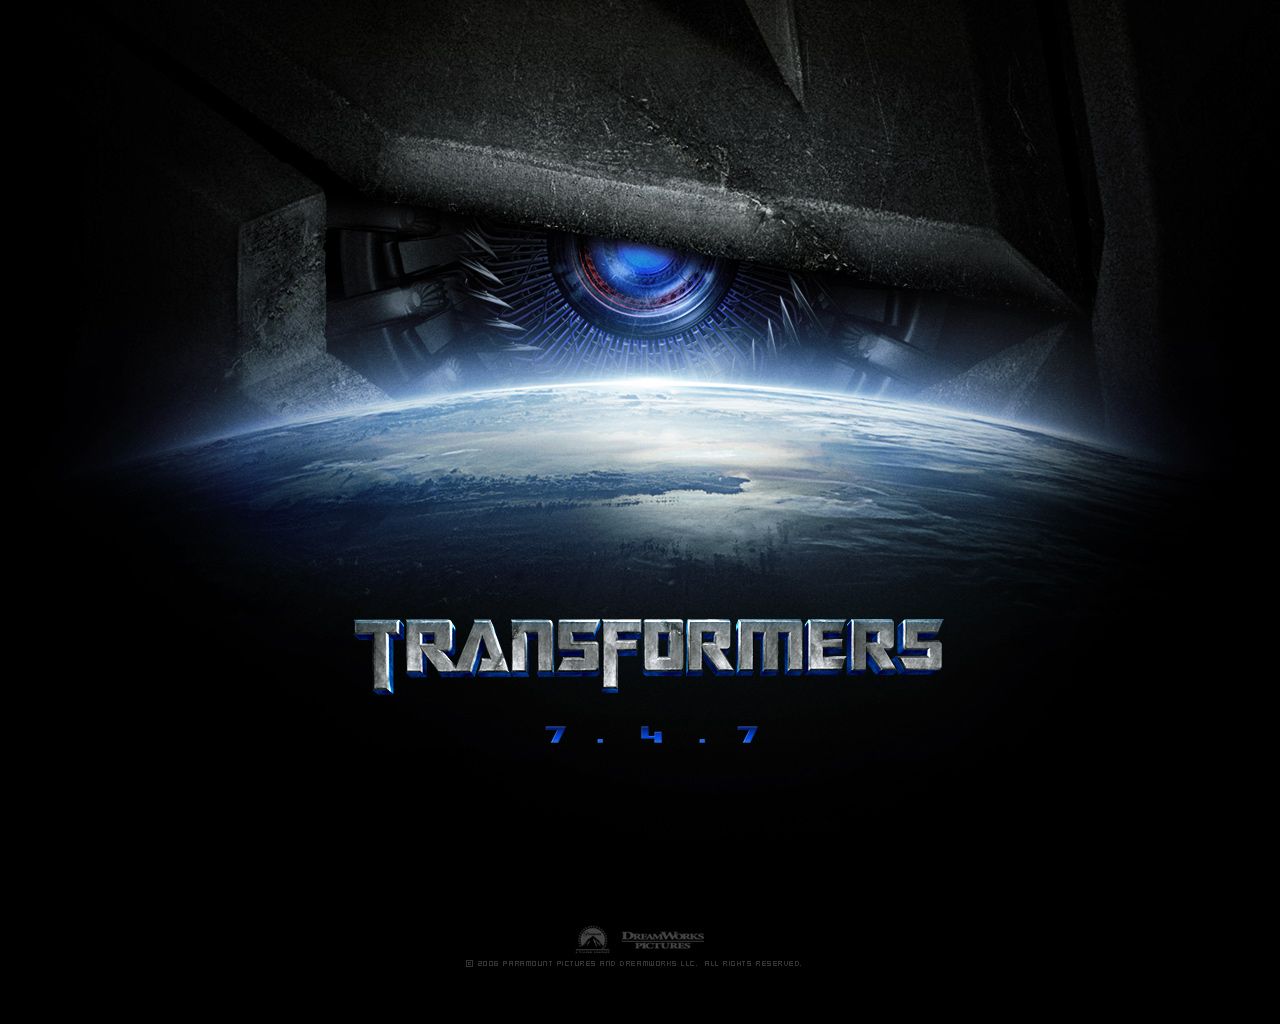 Transformers movie posters Wallpaper Wallpaper 20959